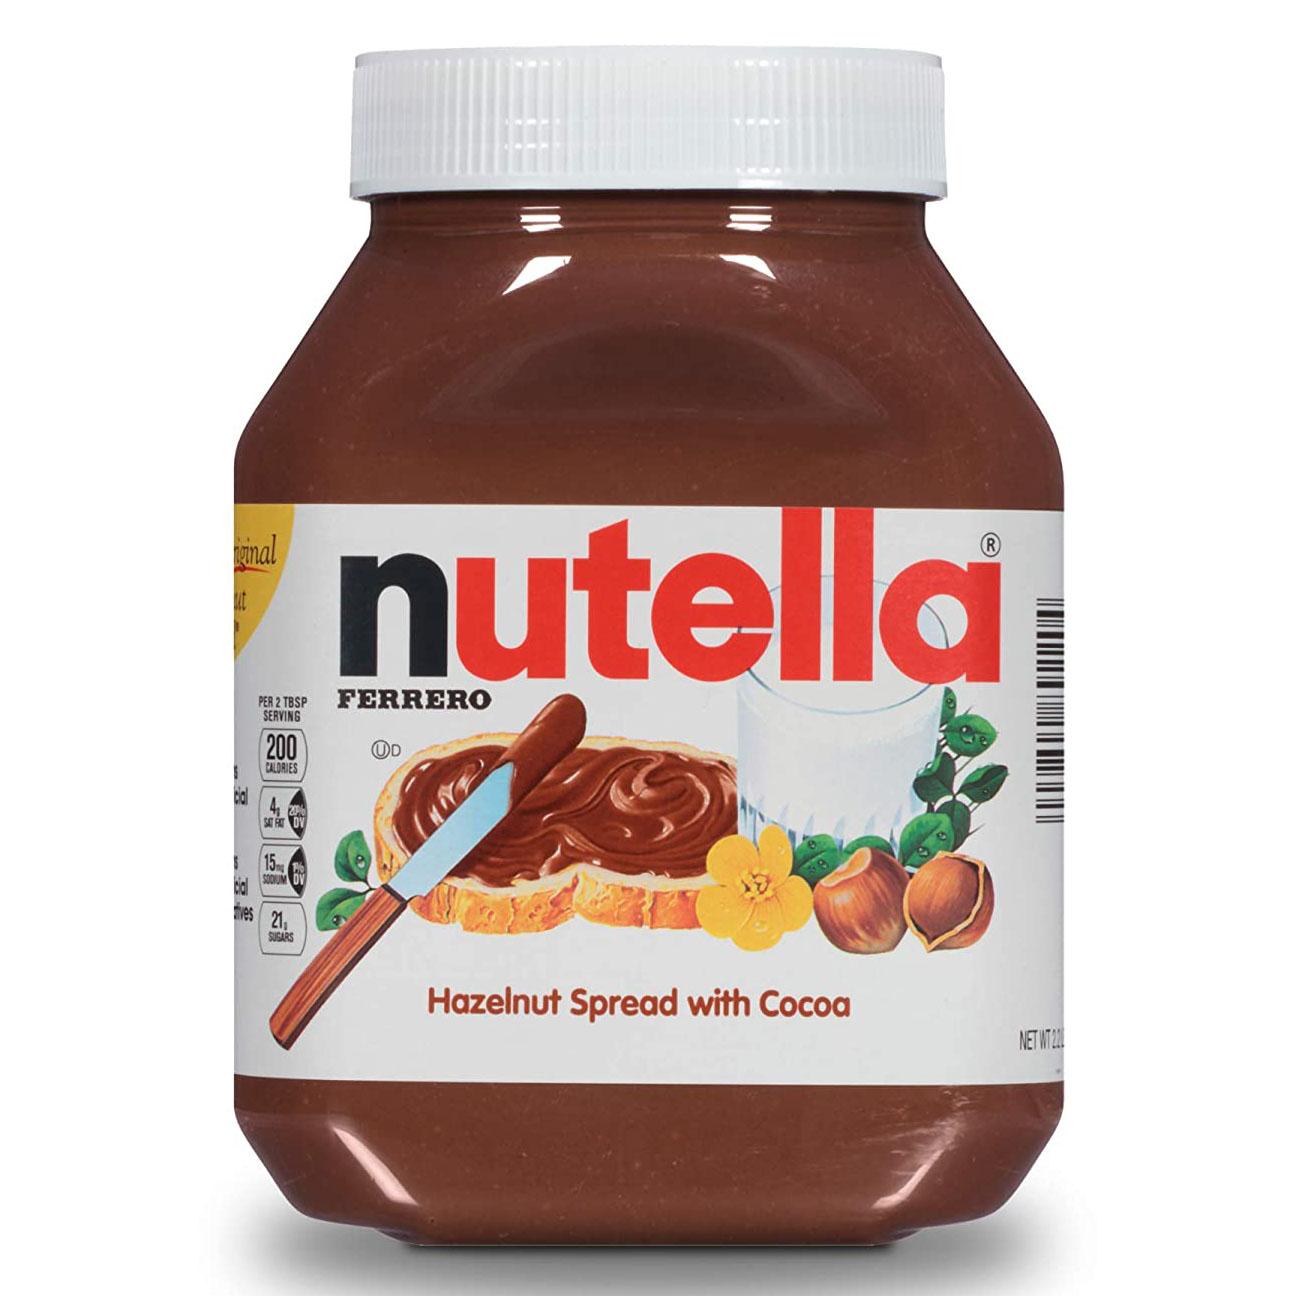 Nutella Chocolate Hazelnut Spread Jar for $6.63 Shipped